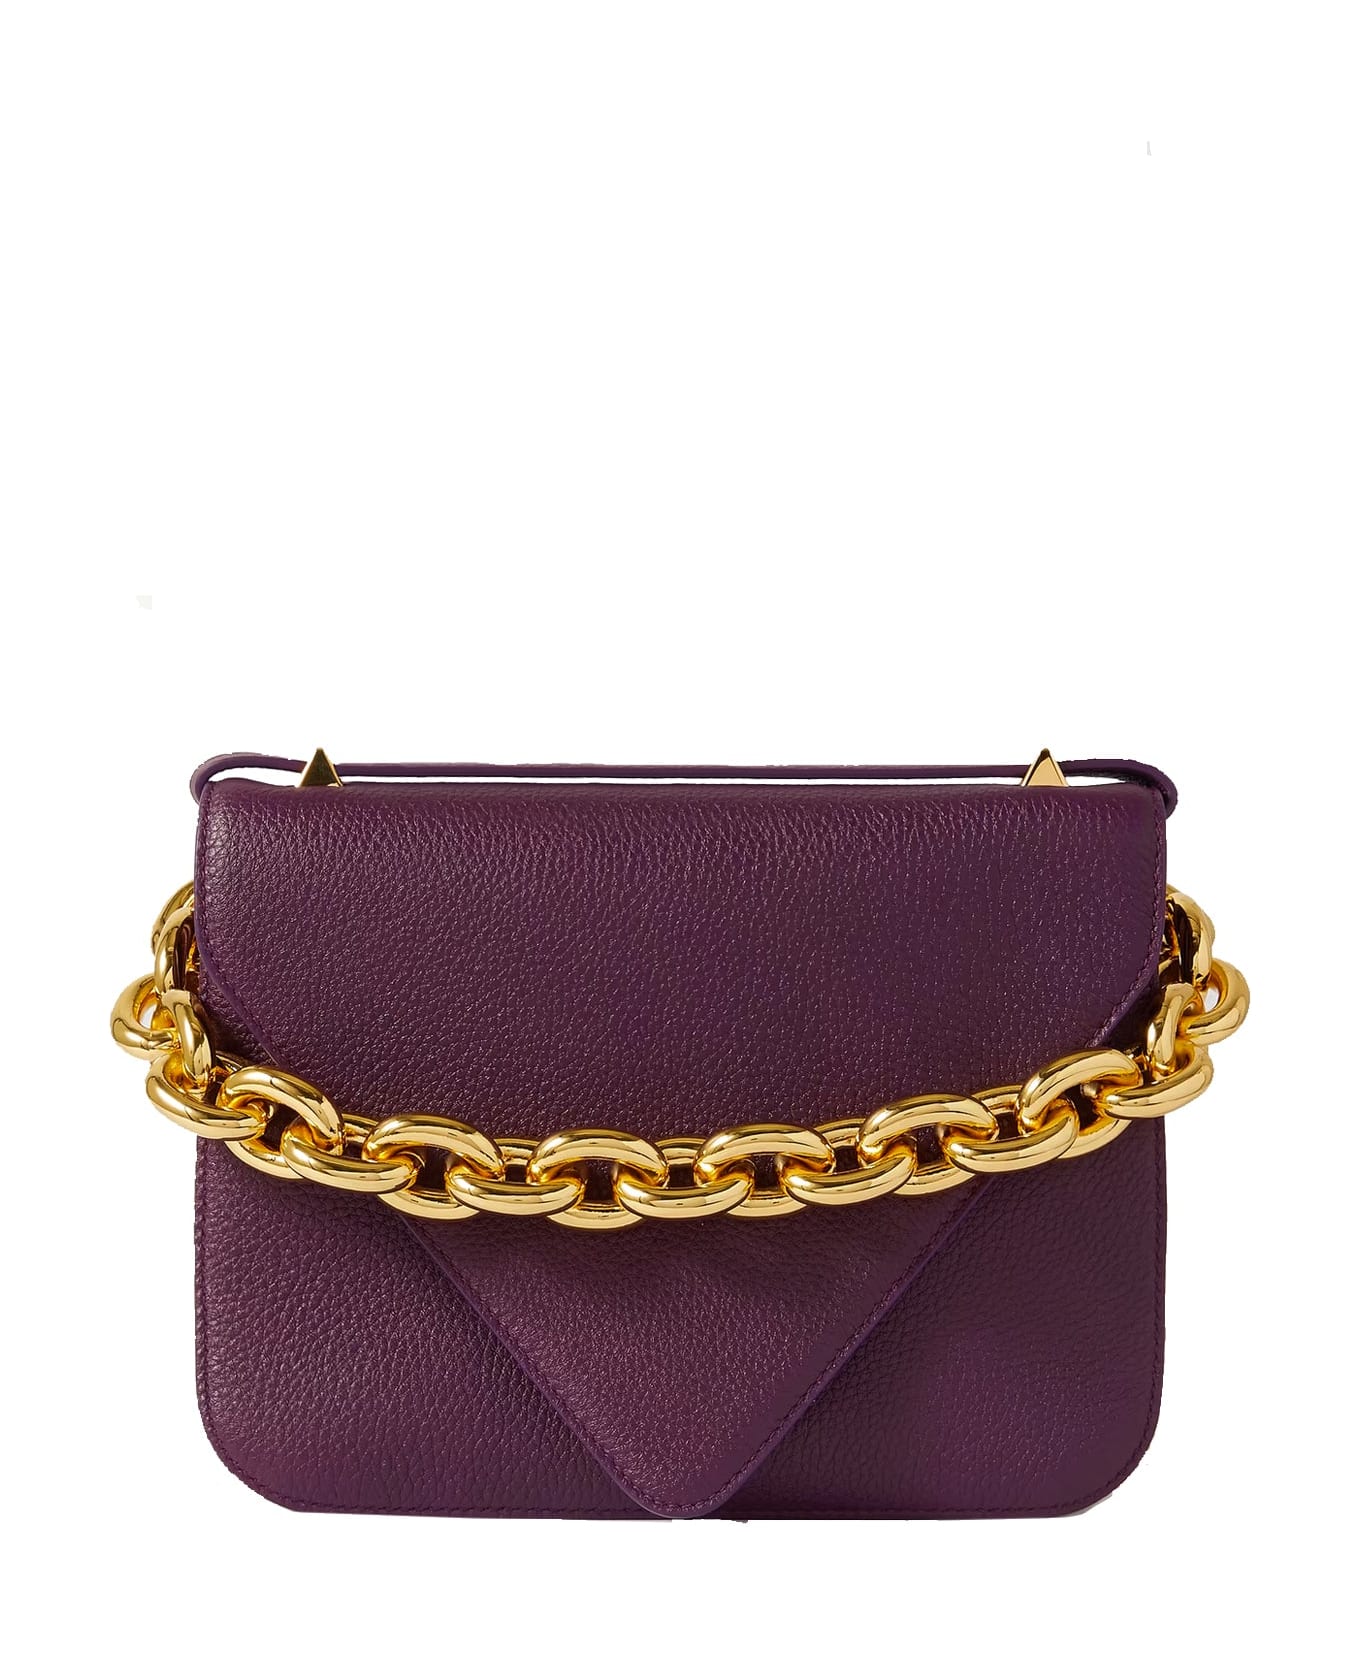 Bottega Veneta Mount Small Leather Bag - Purple